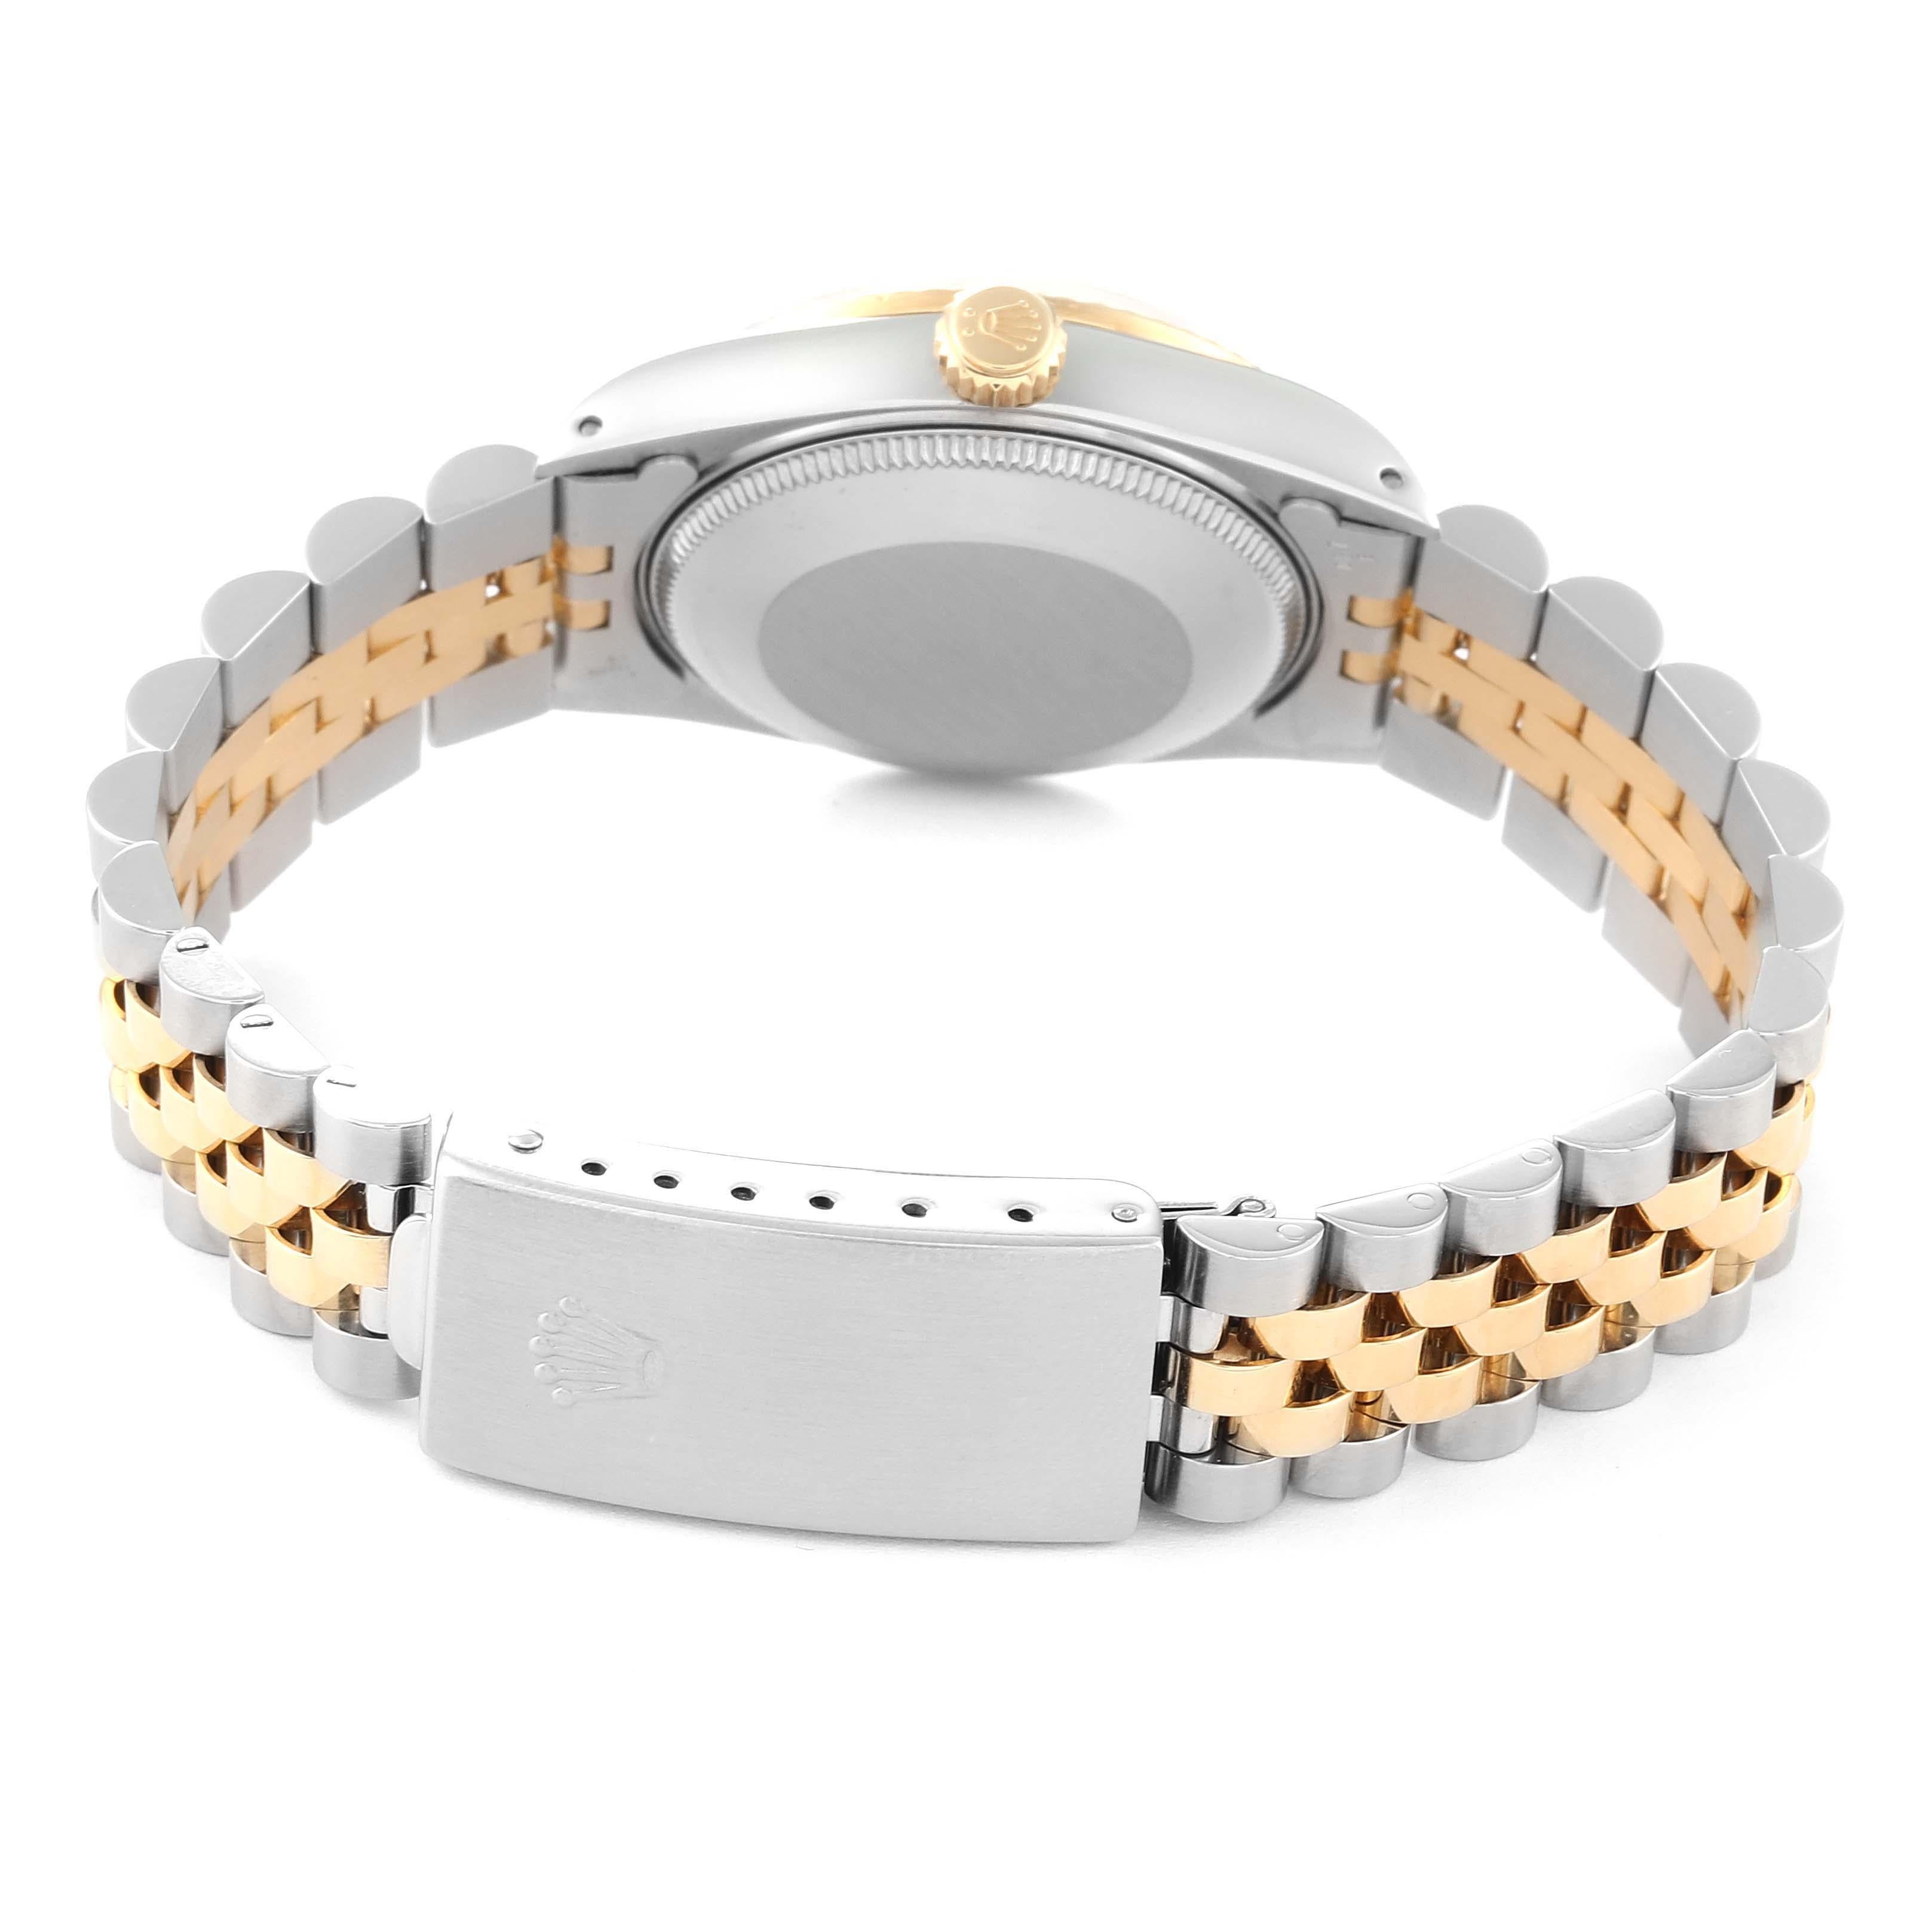 Rolex Datejust Midsize Diamond Dial Steel Yellow Gold Ladies Watch 68273 2